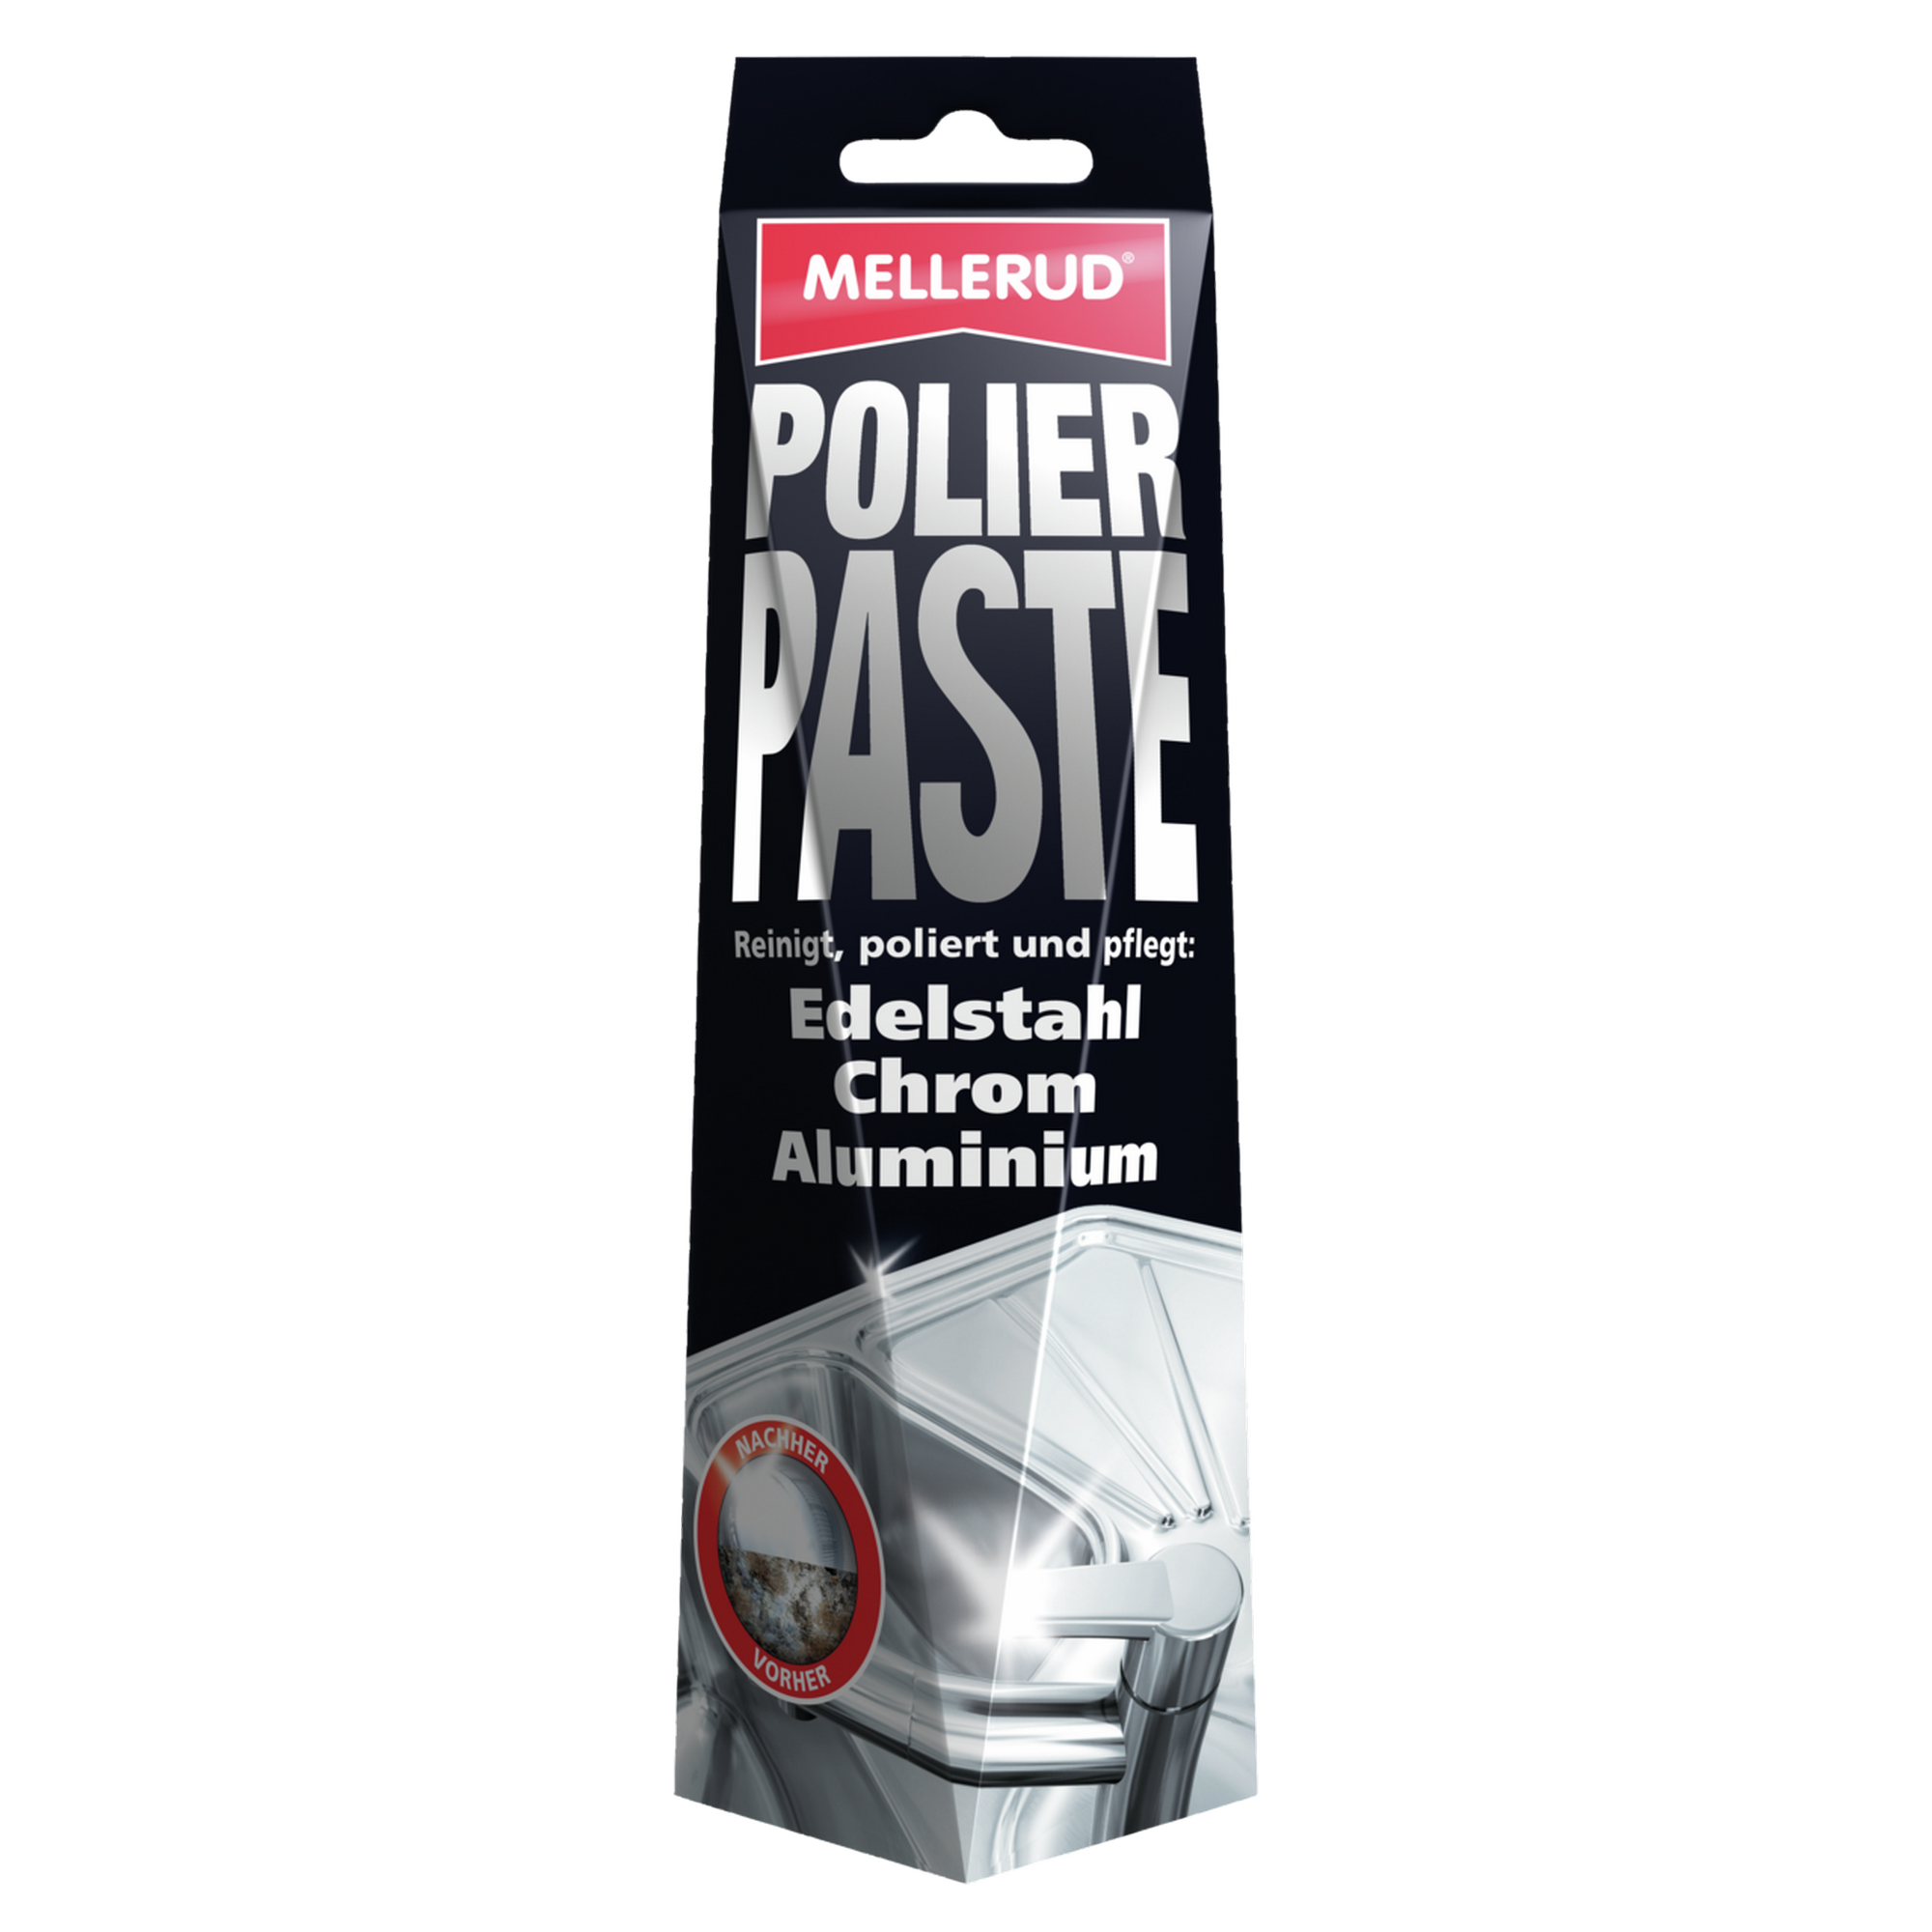 Polierpaste für Chrom 150 ml + product picture